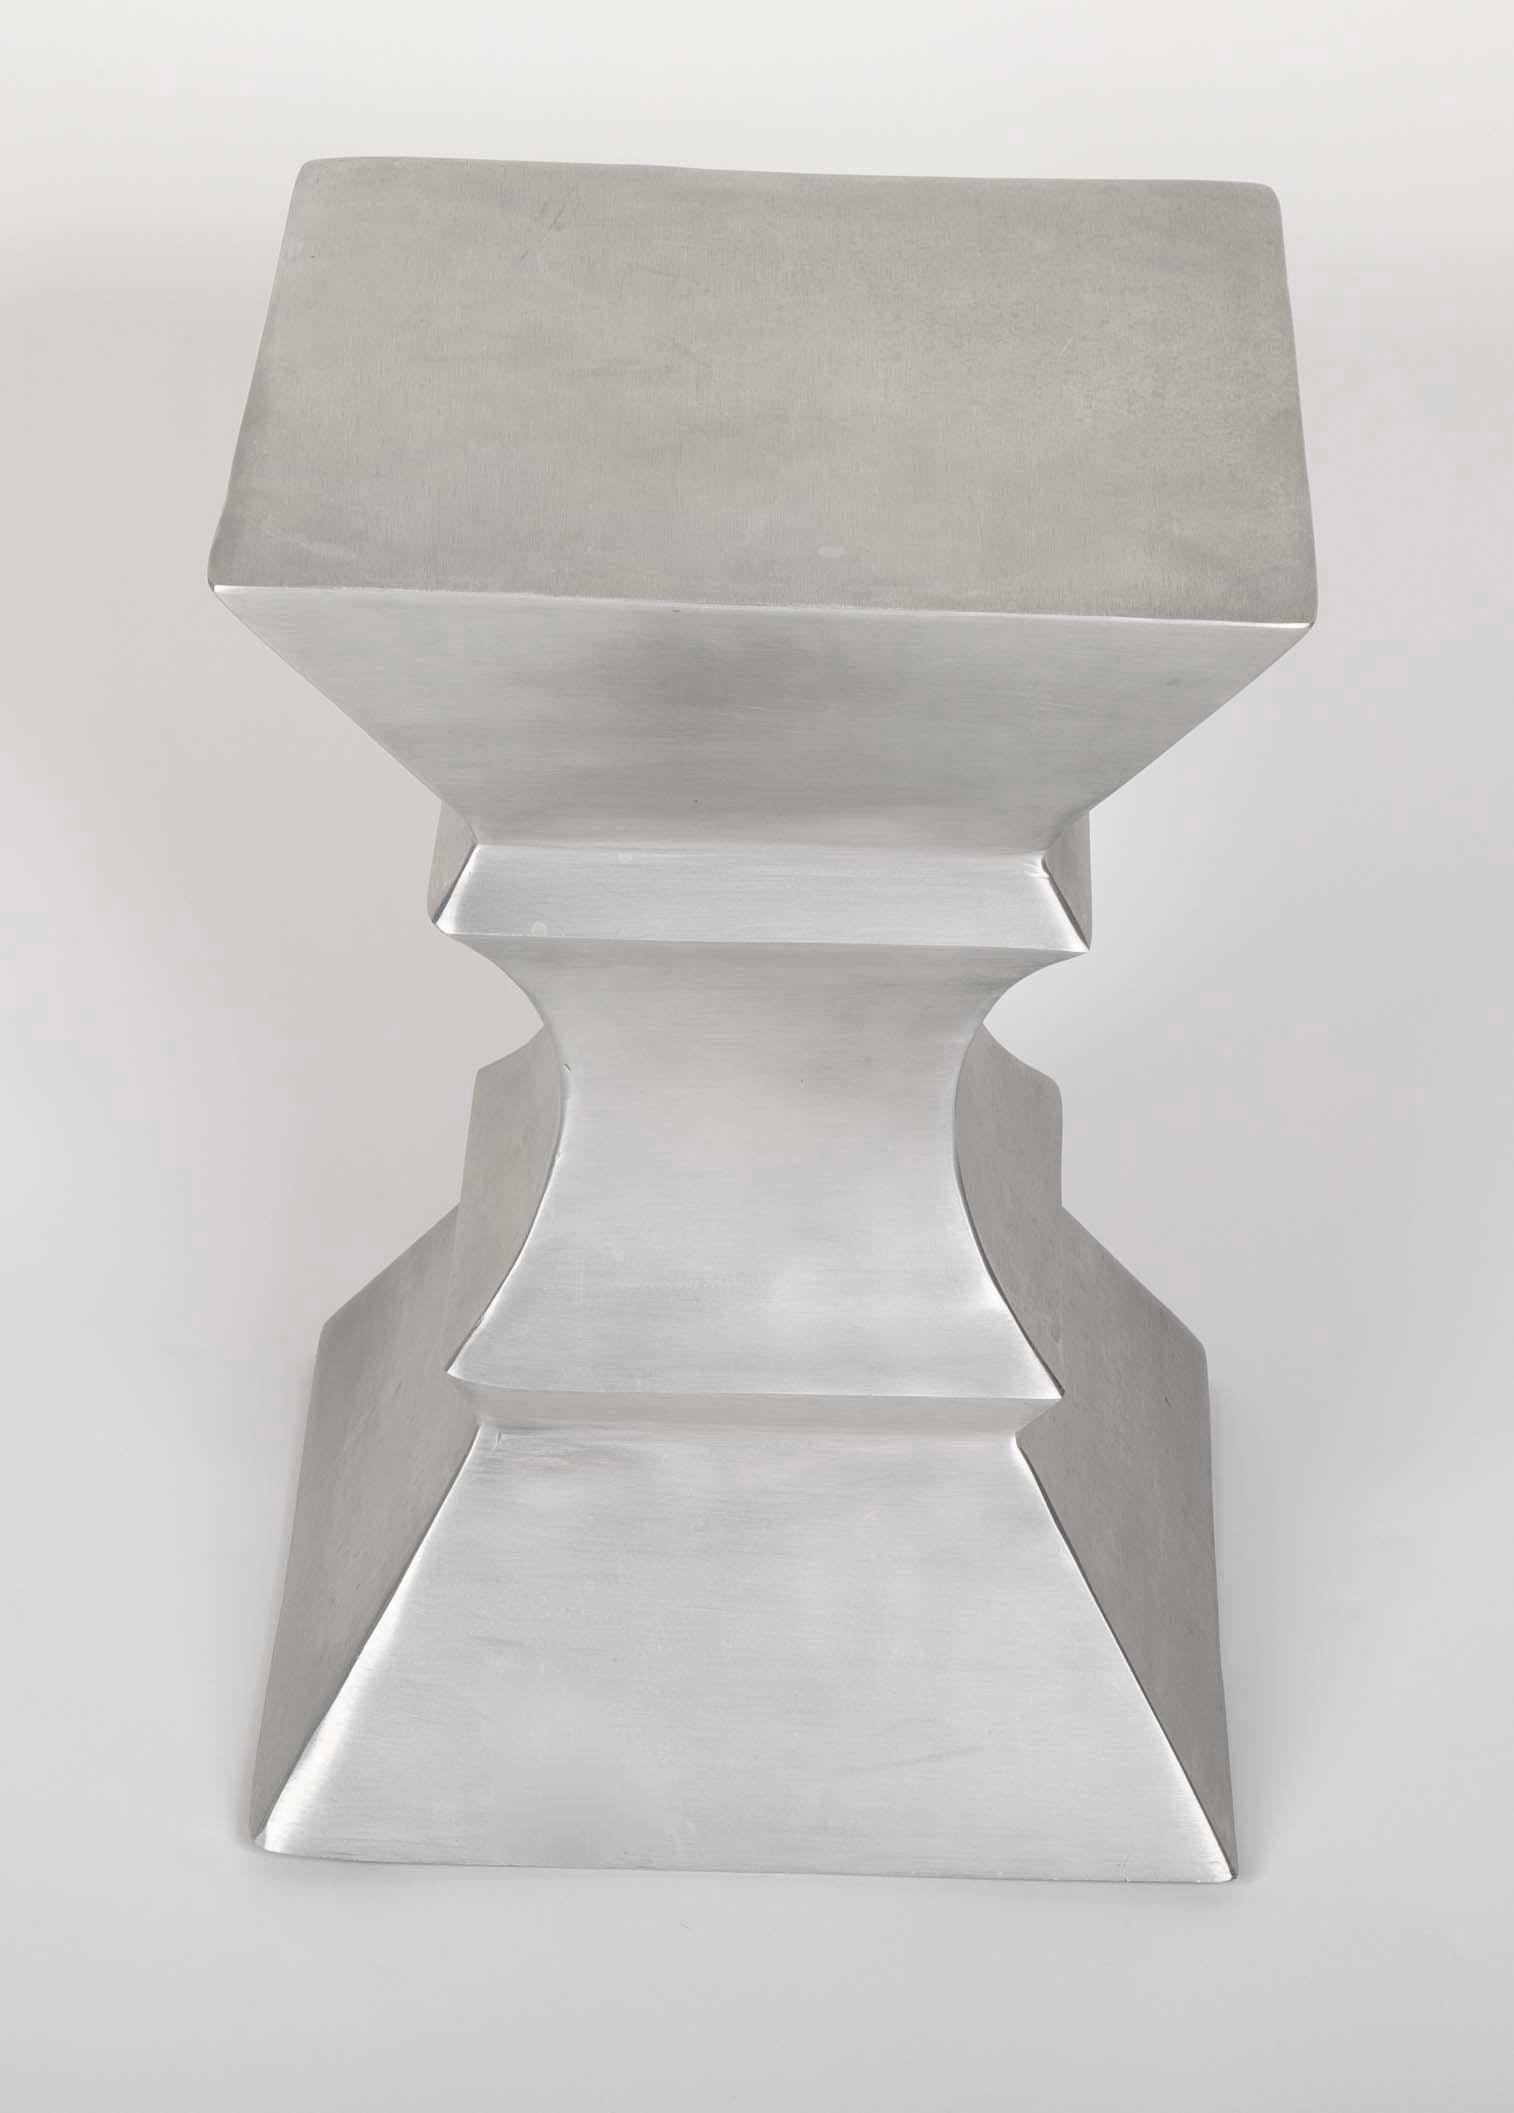 Brancusi Style Aluminum Side Tables, a Set of Three 2